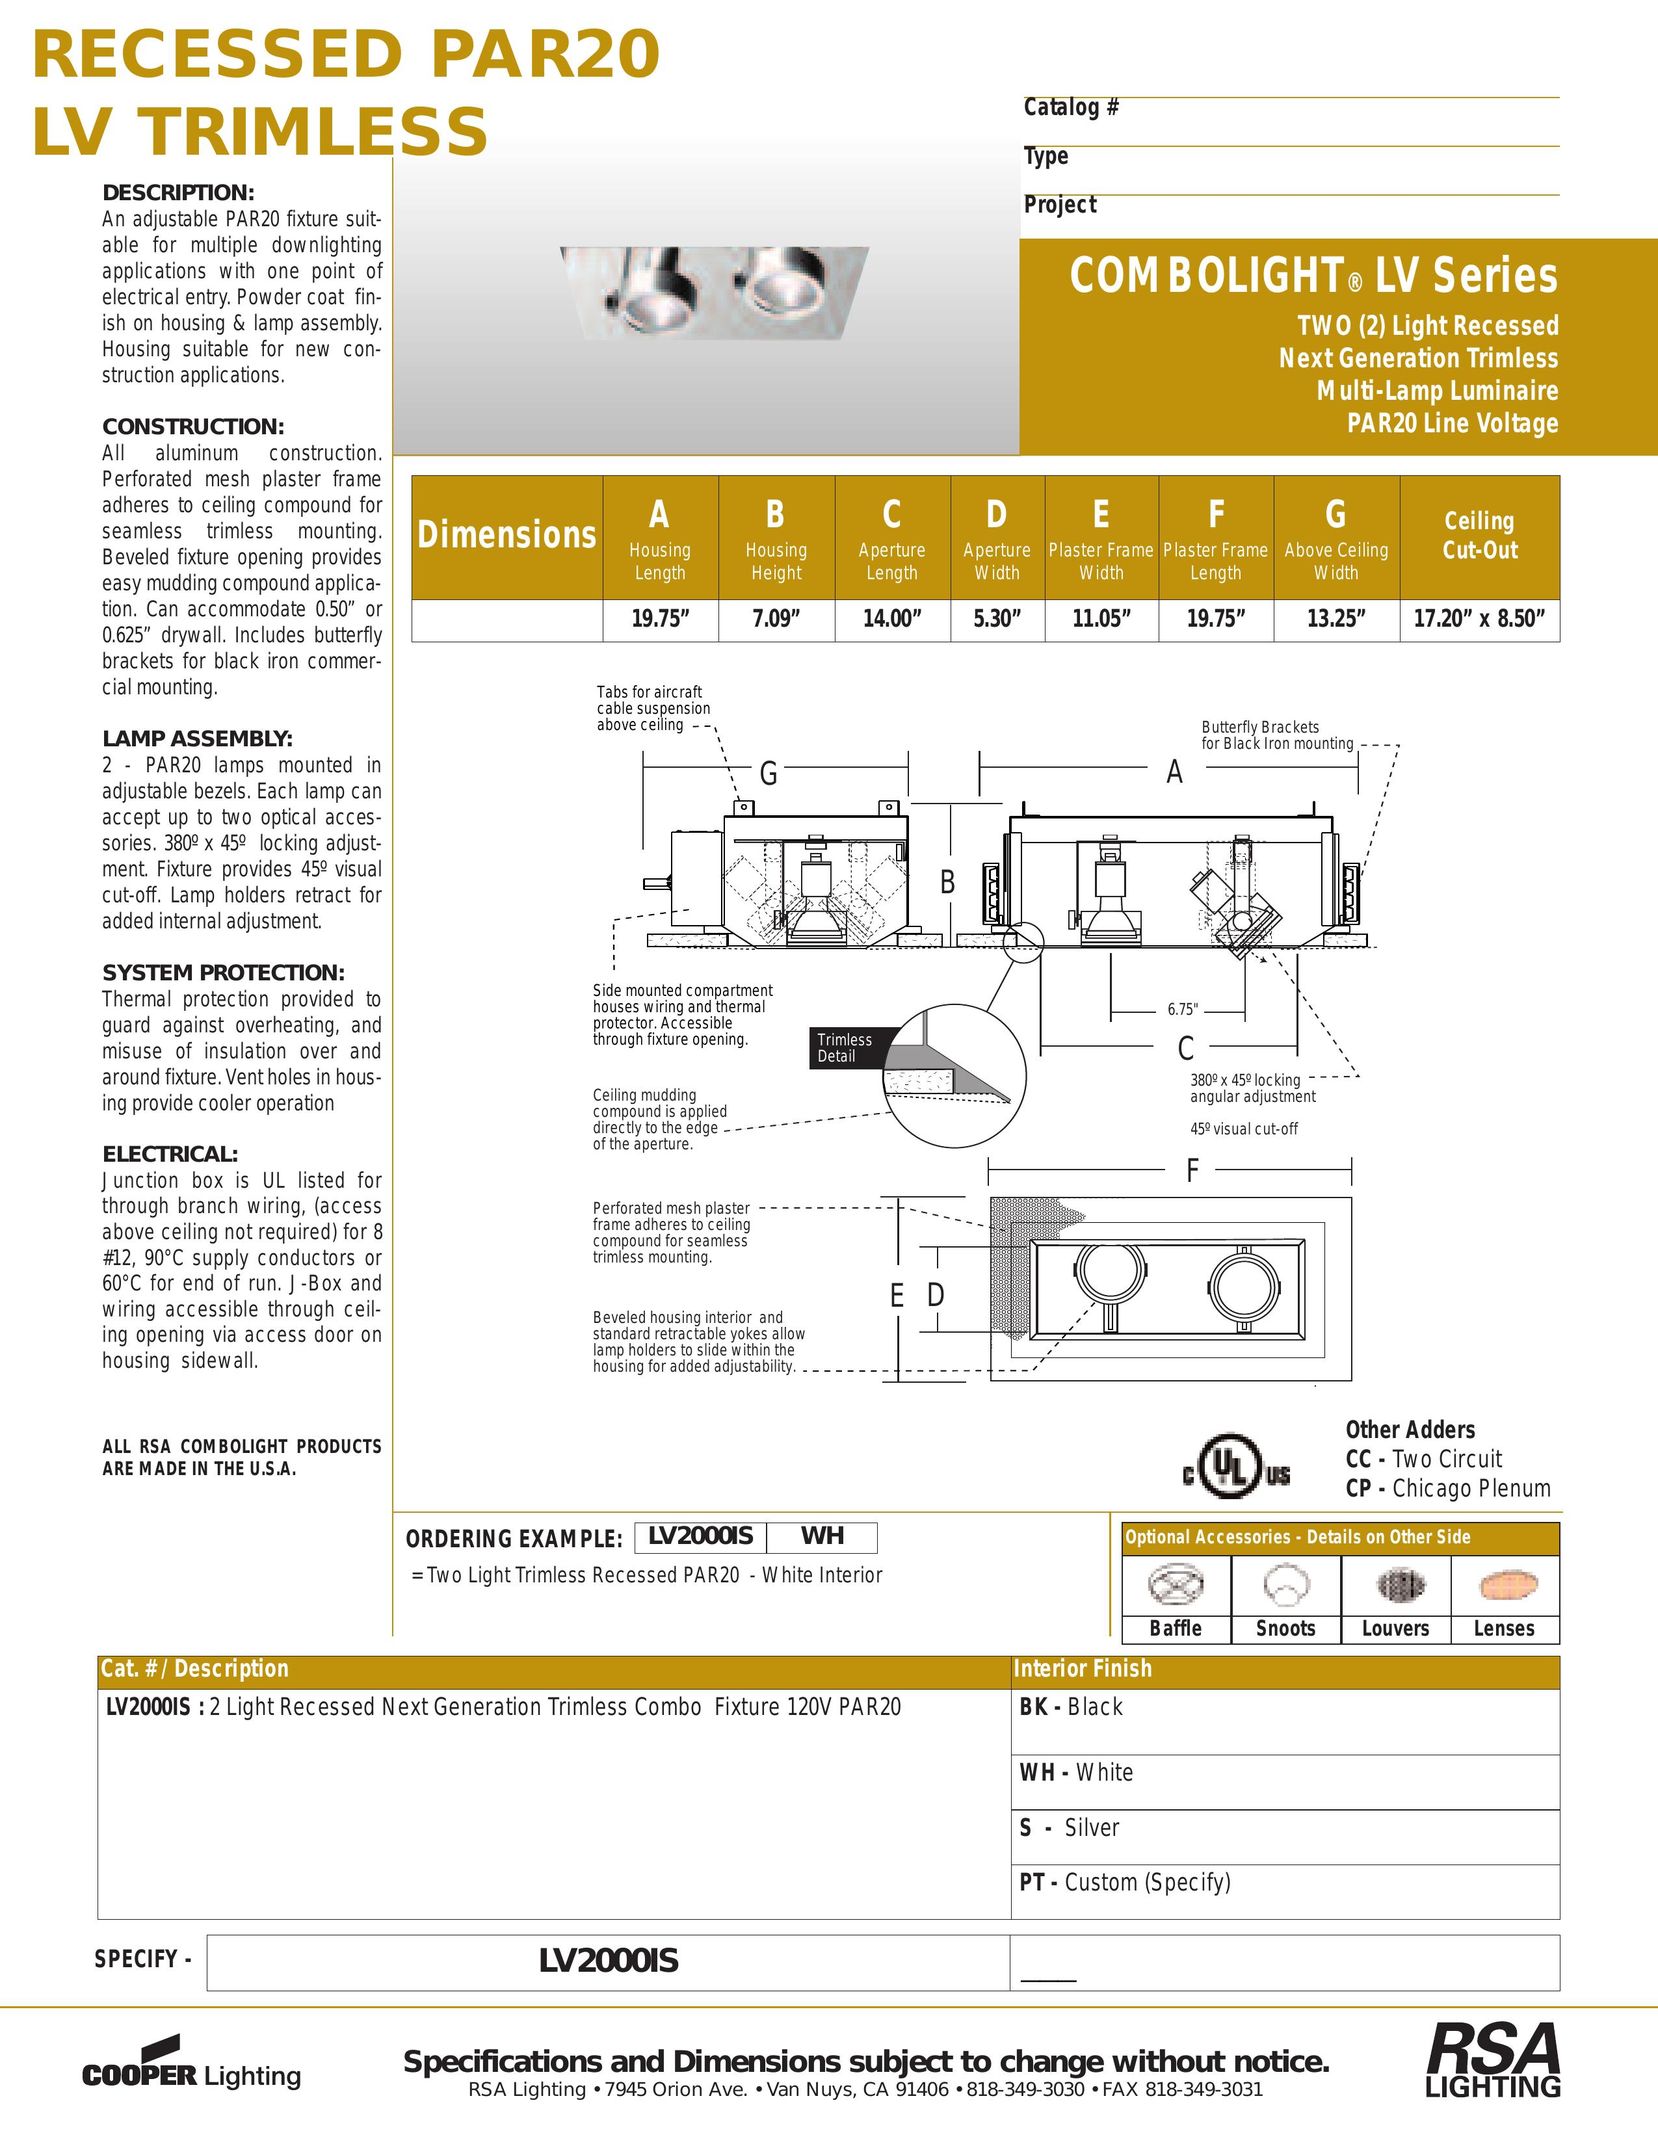 RSA Lighting PAR20 Indoor Furnishings User Manual